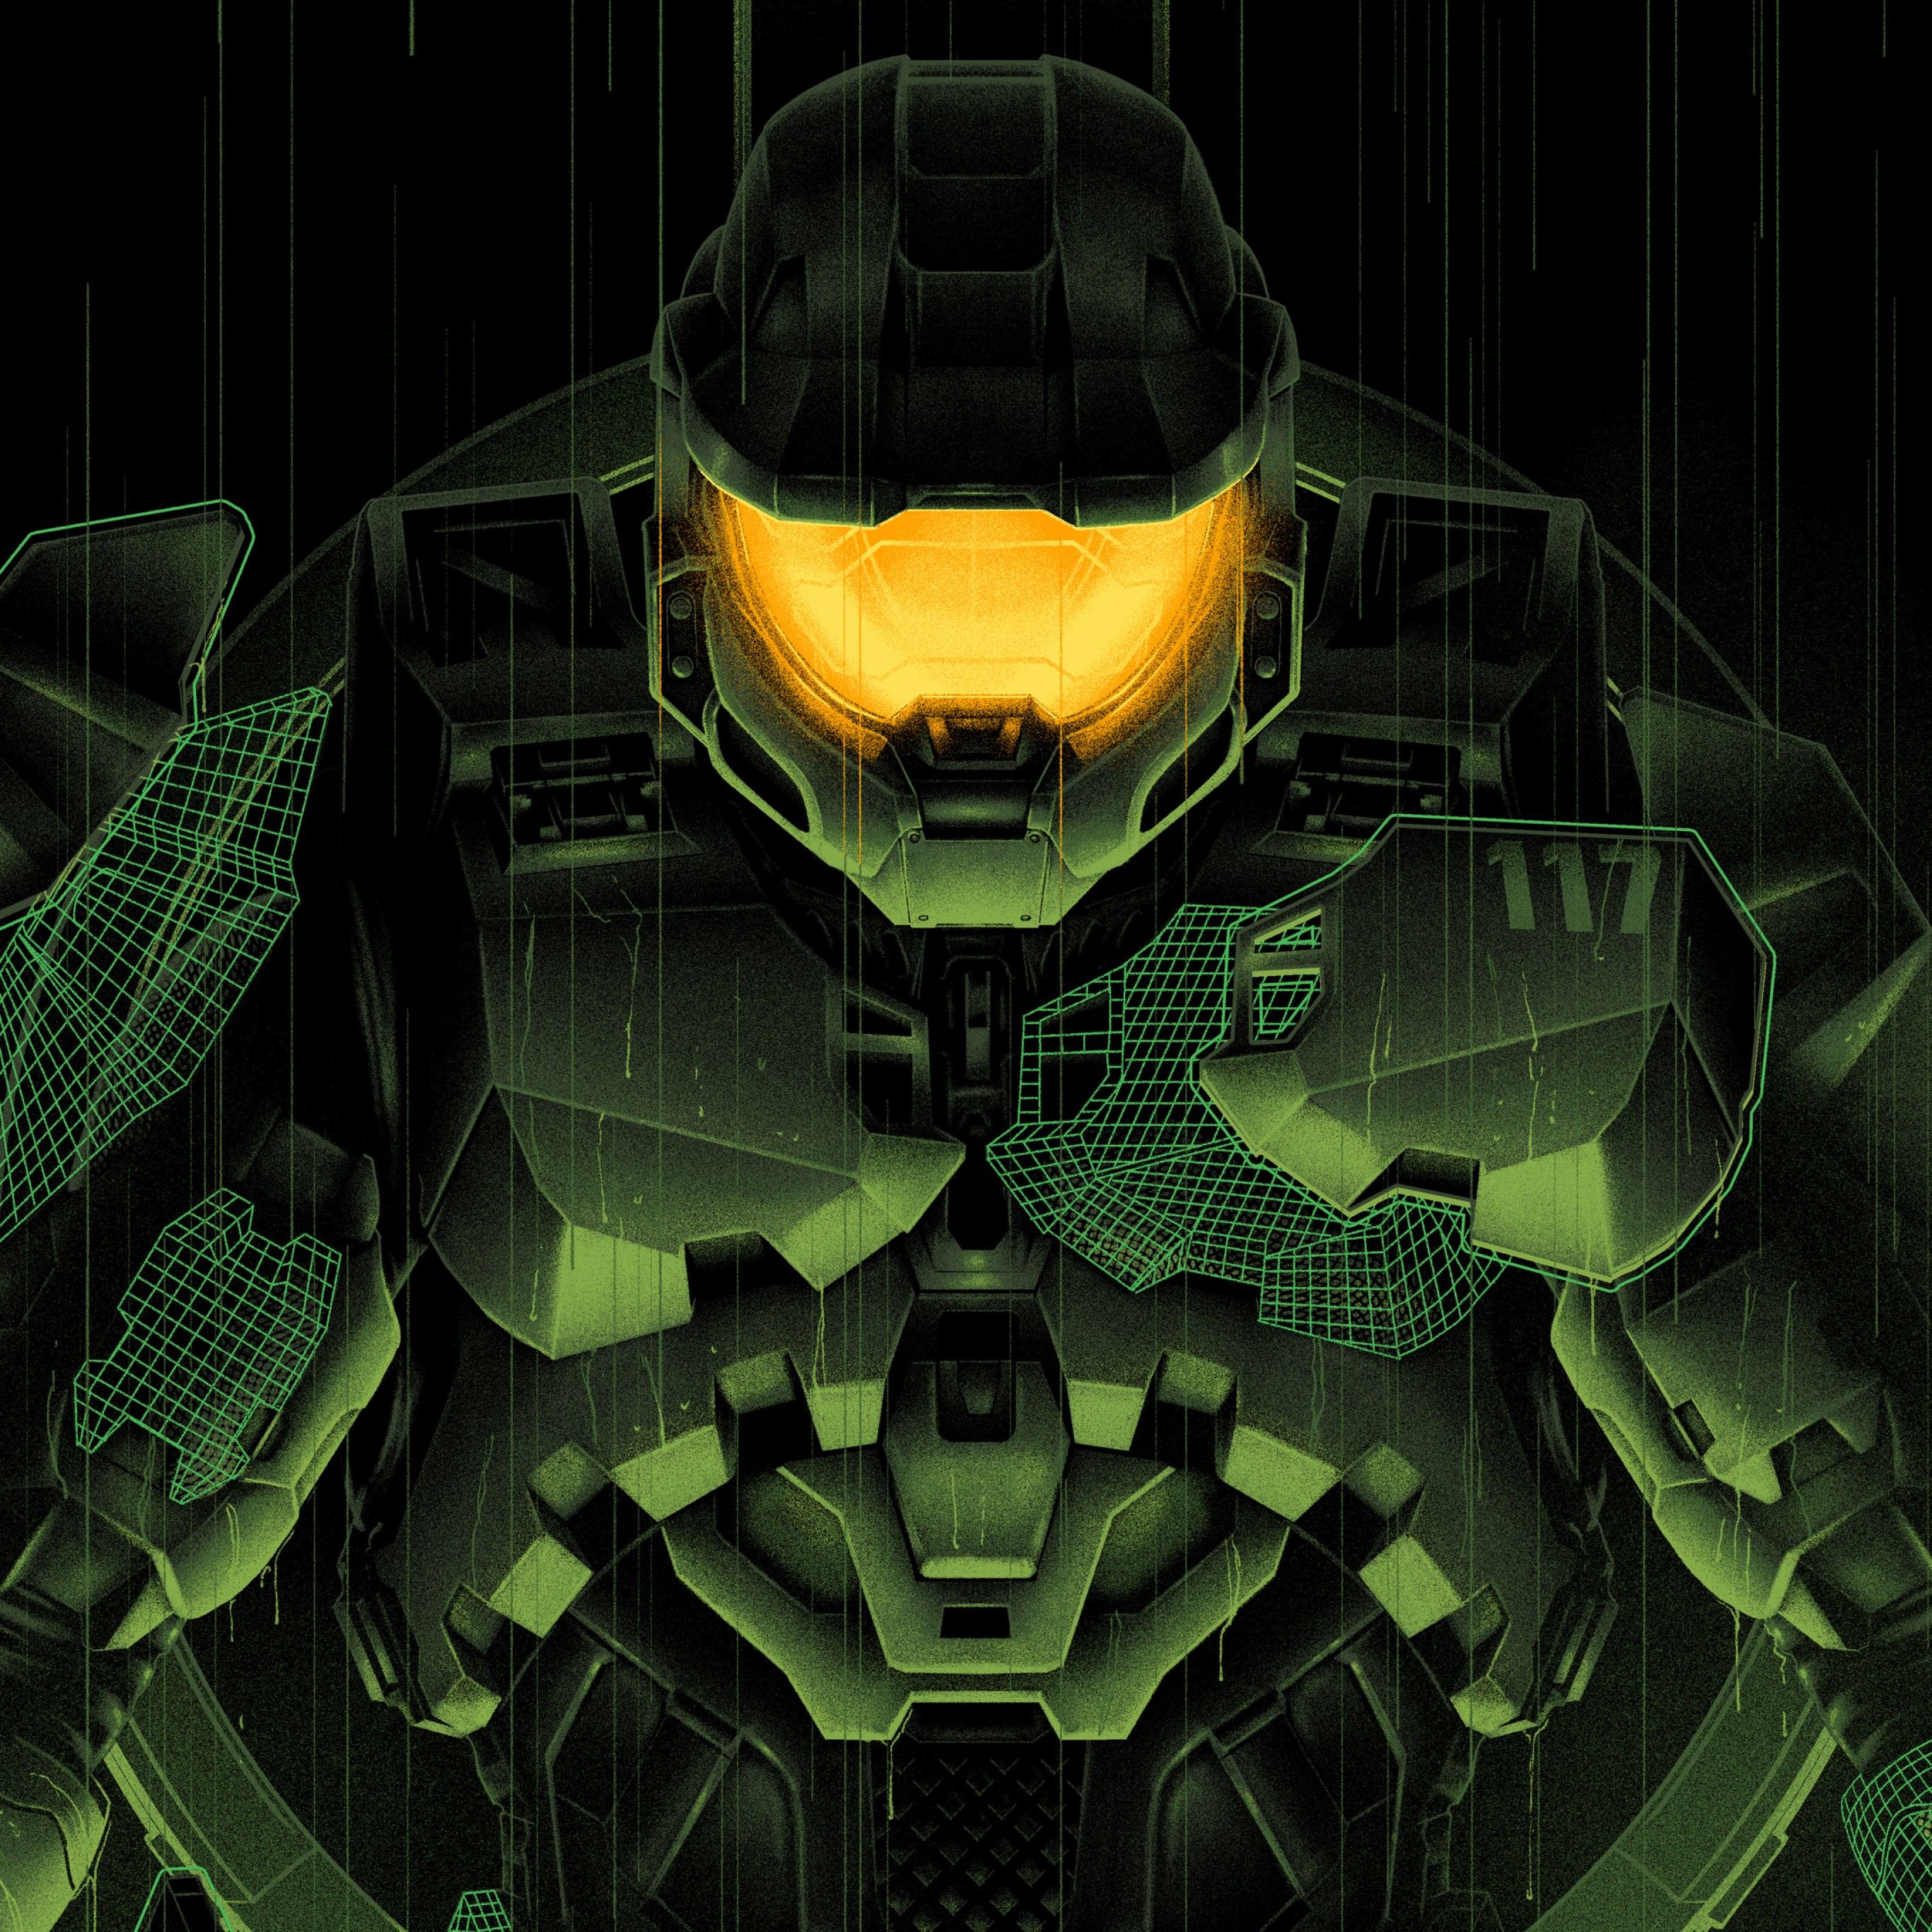 Master Chief 4K Wallpaper, Halo Infinite, Artwork, Games